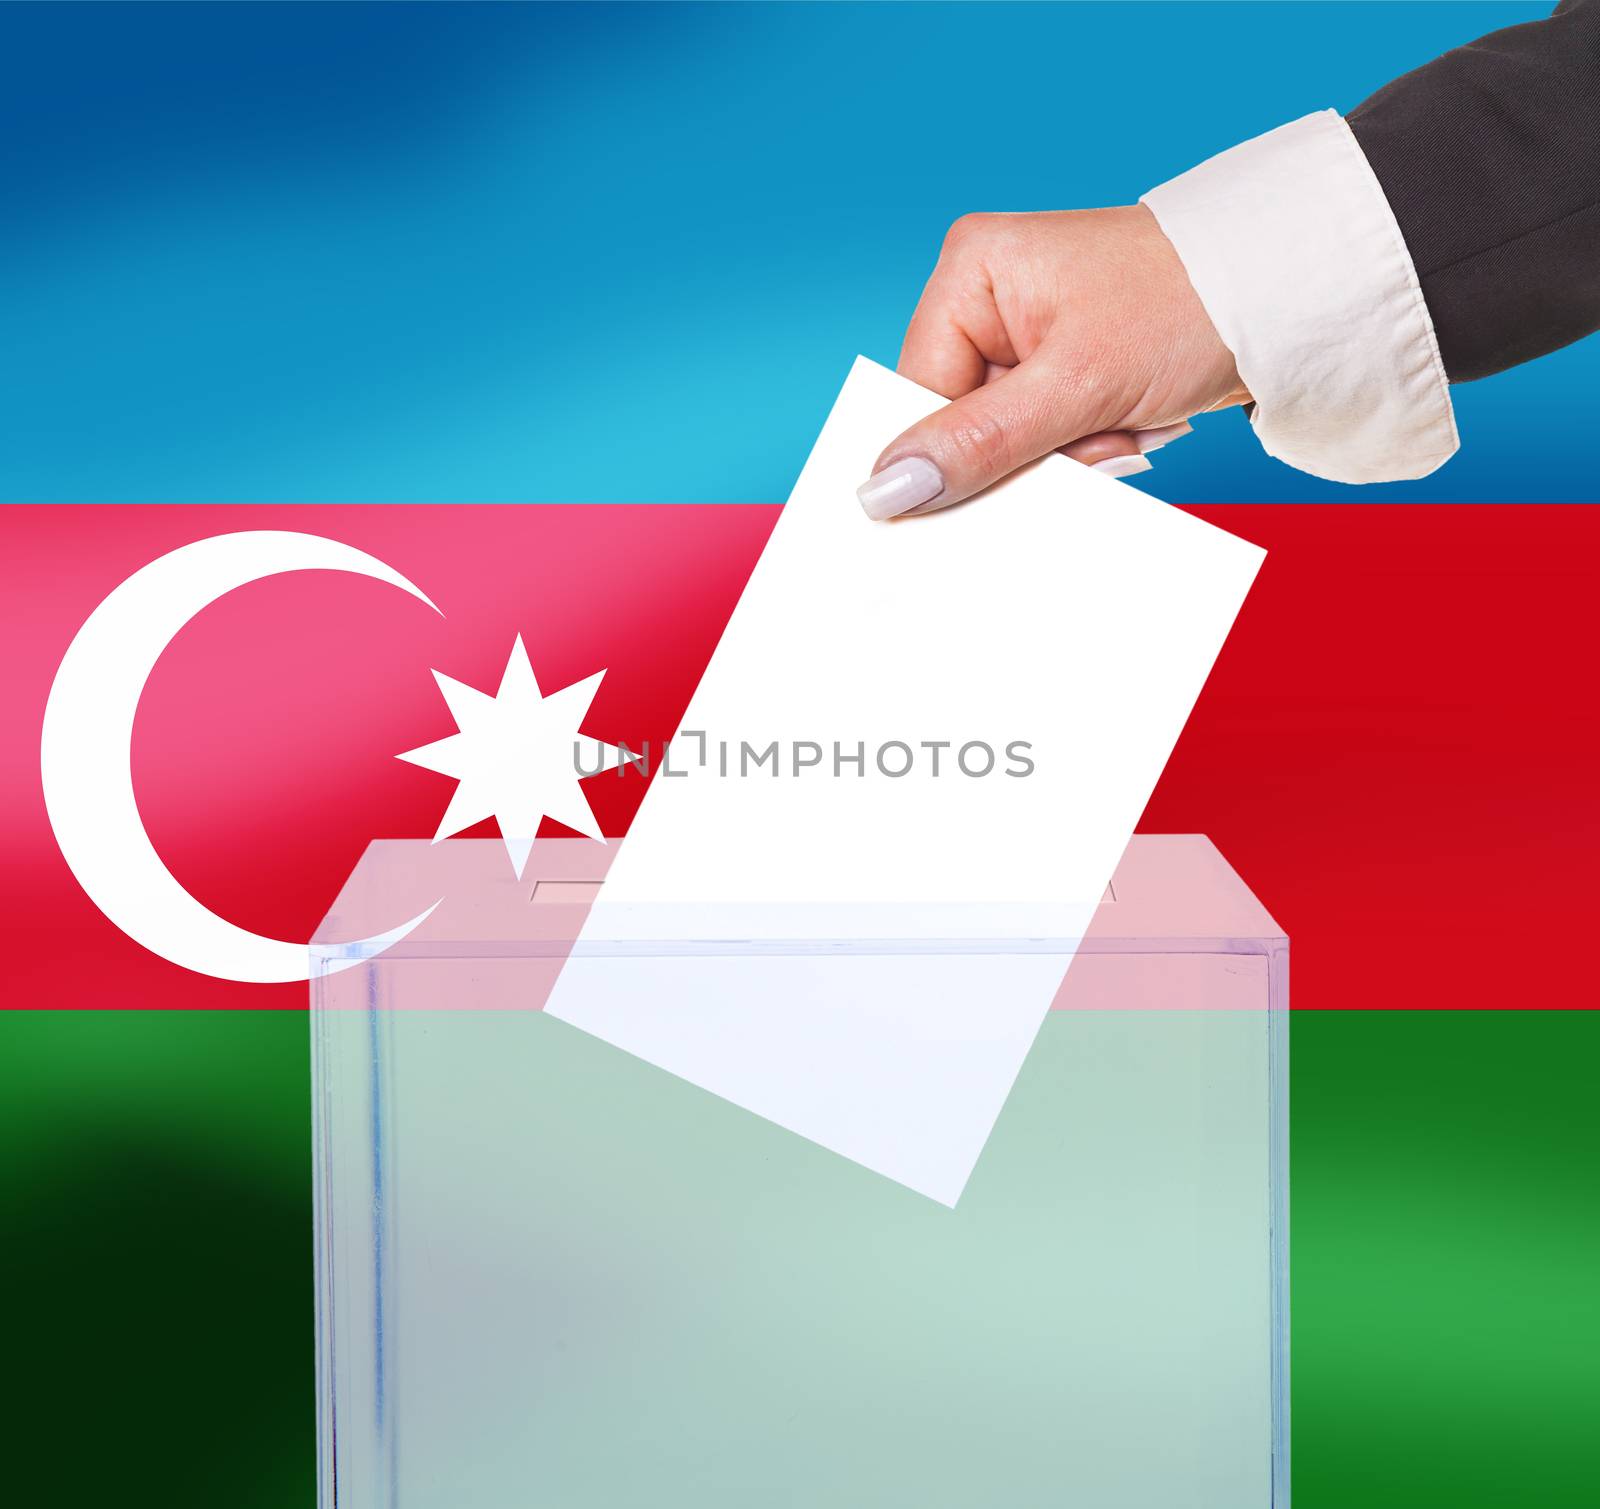 electoral vote by ballot, under the Azerbaijan flag